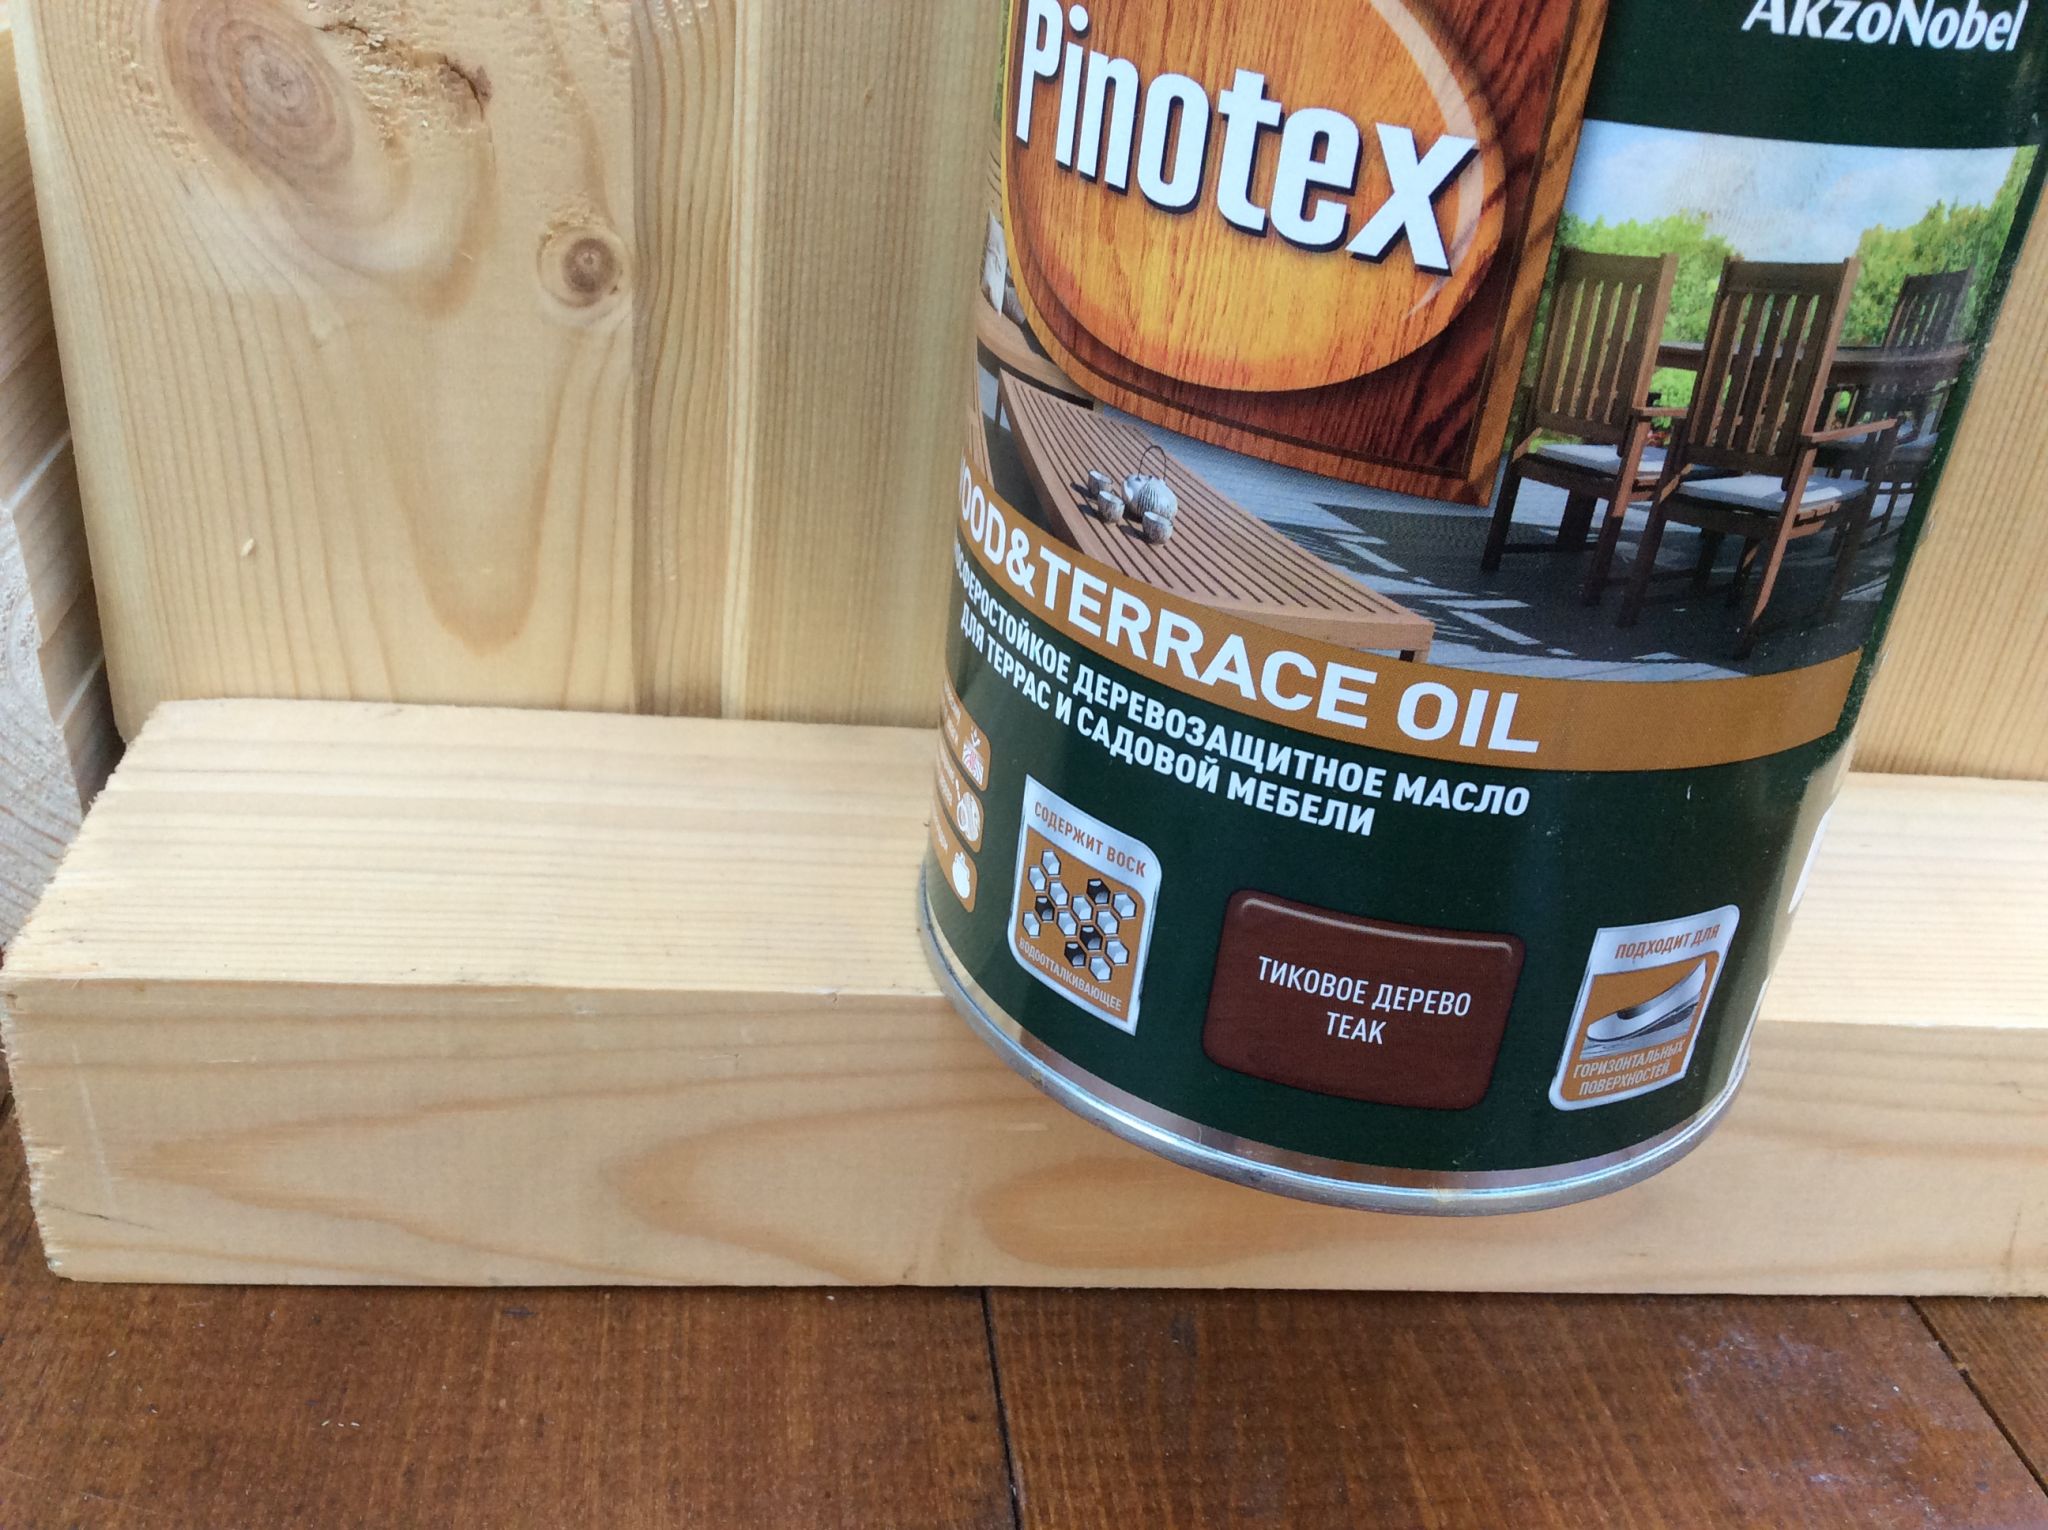 Pinotex Terrace Oil тиковое дерево